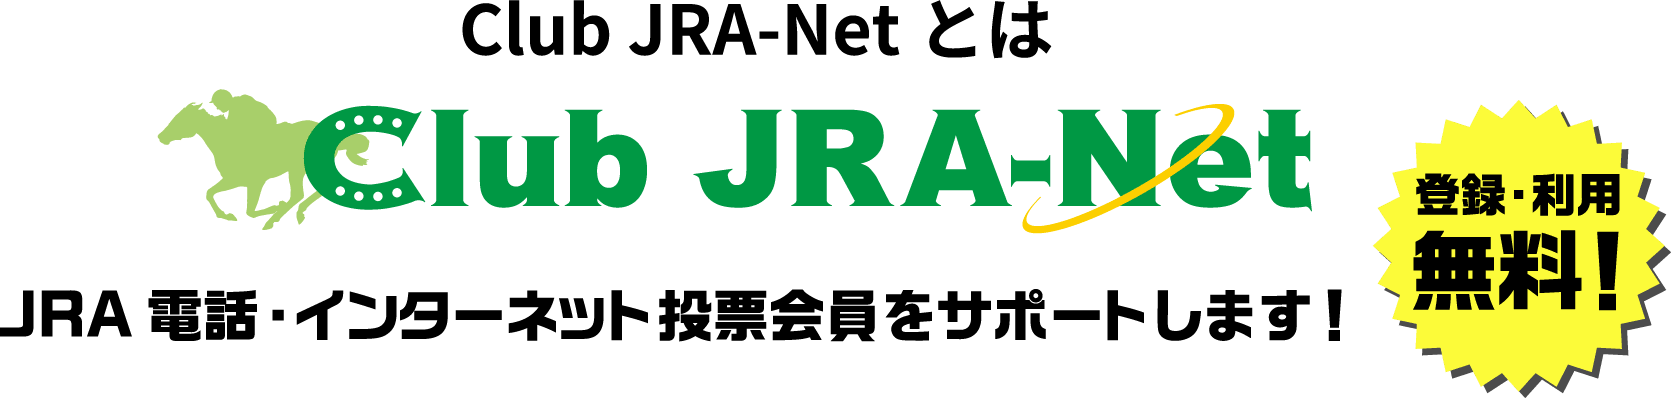 Club JRA-Netとは Club JRA-NET JRA電話・インターネット投票会員をサポートします！ 登録・利用無料！